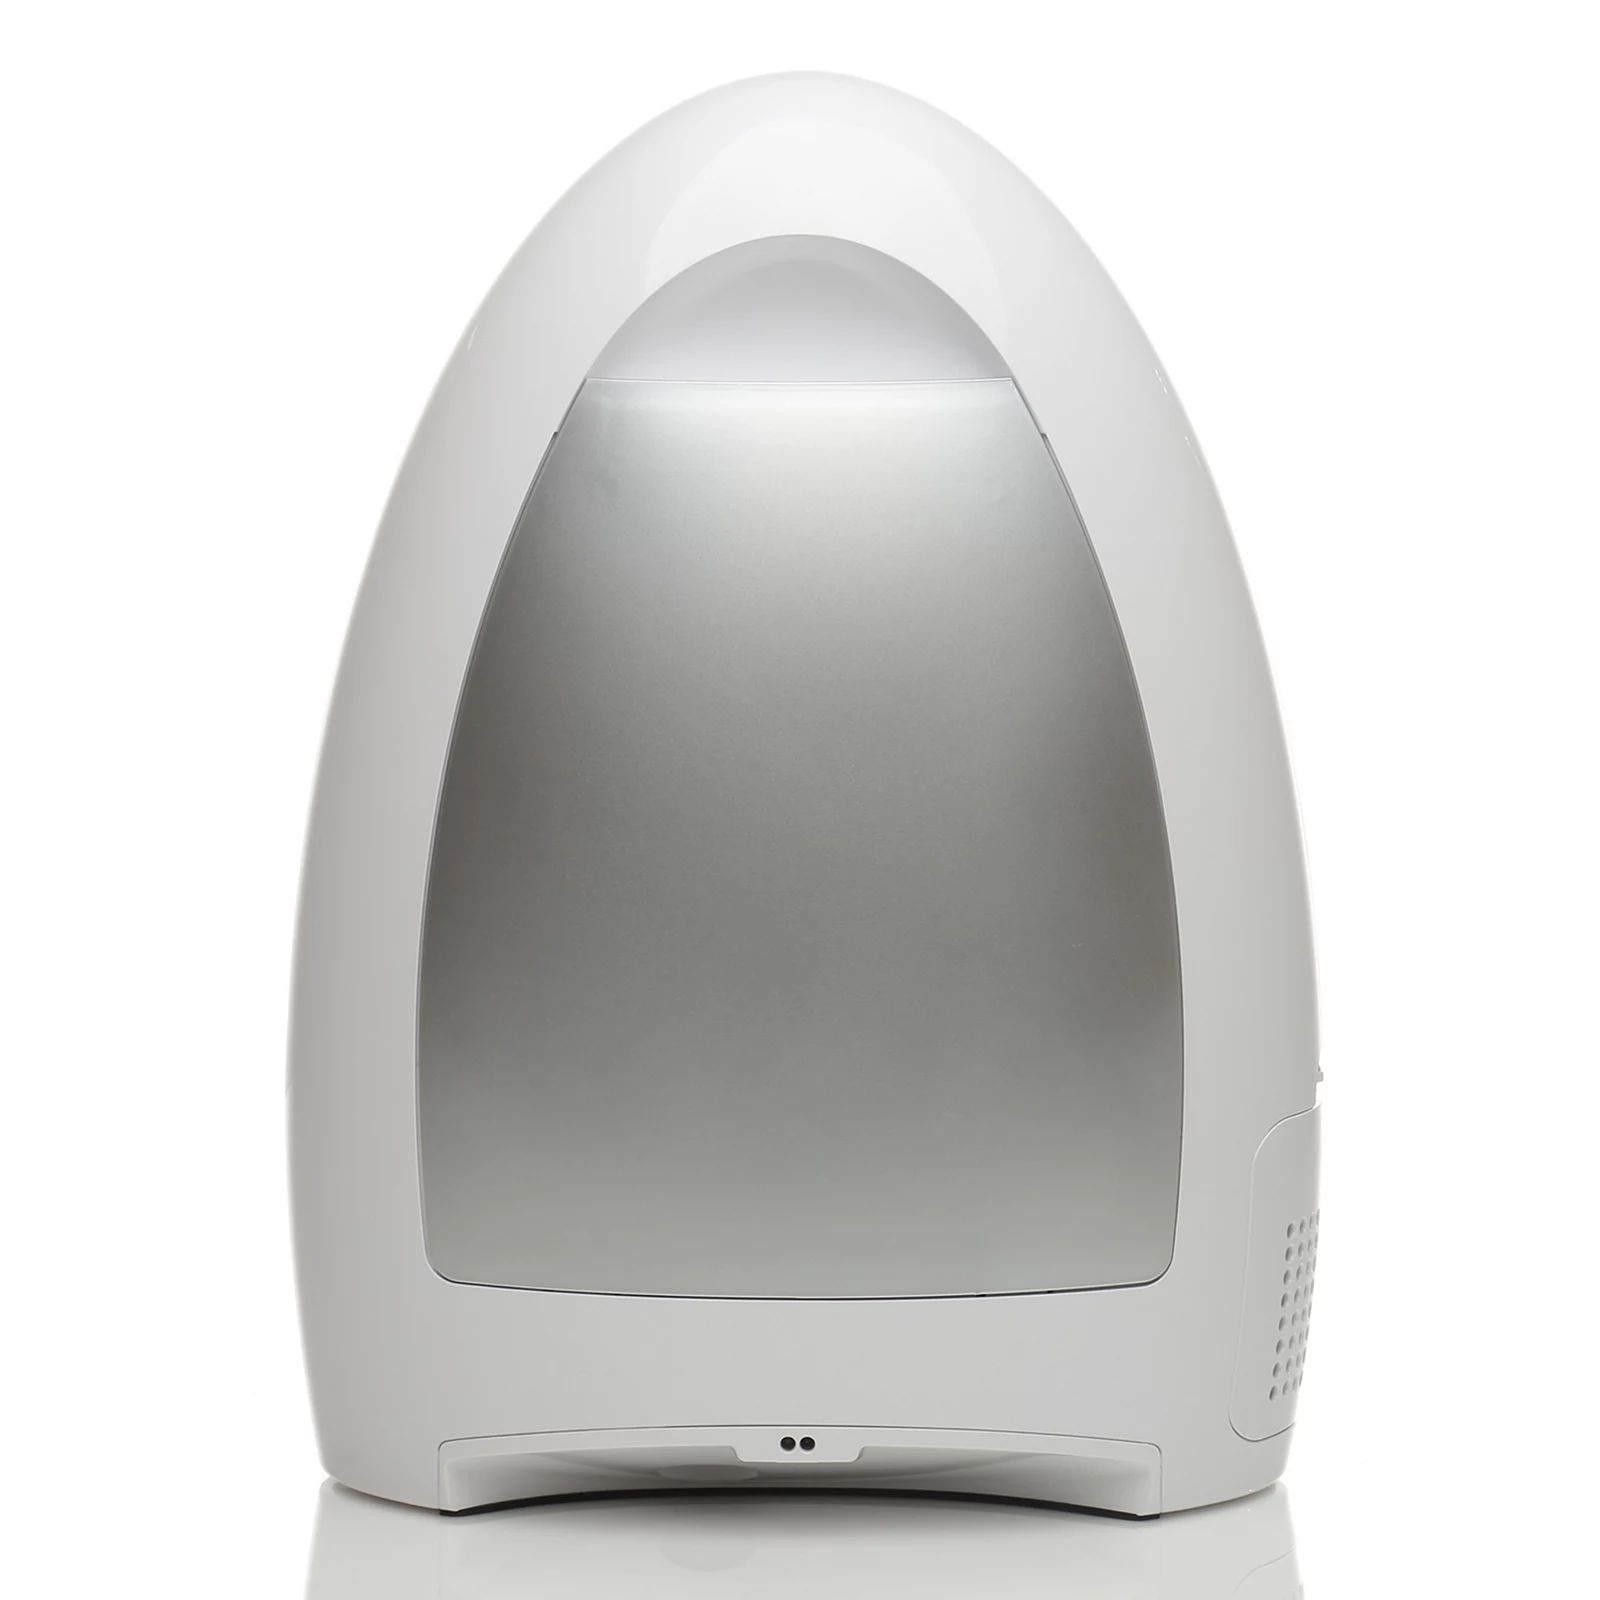 EyeVac Home Touchless Vacuum, White | Kohl's